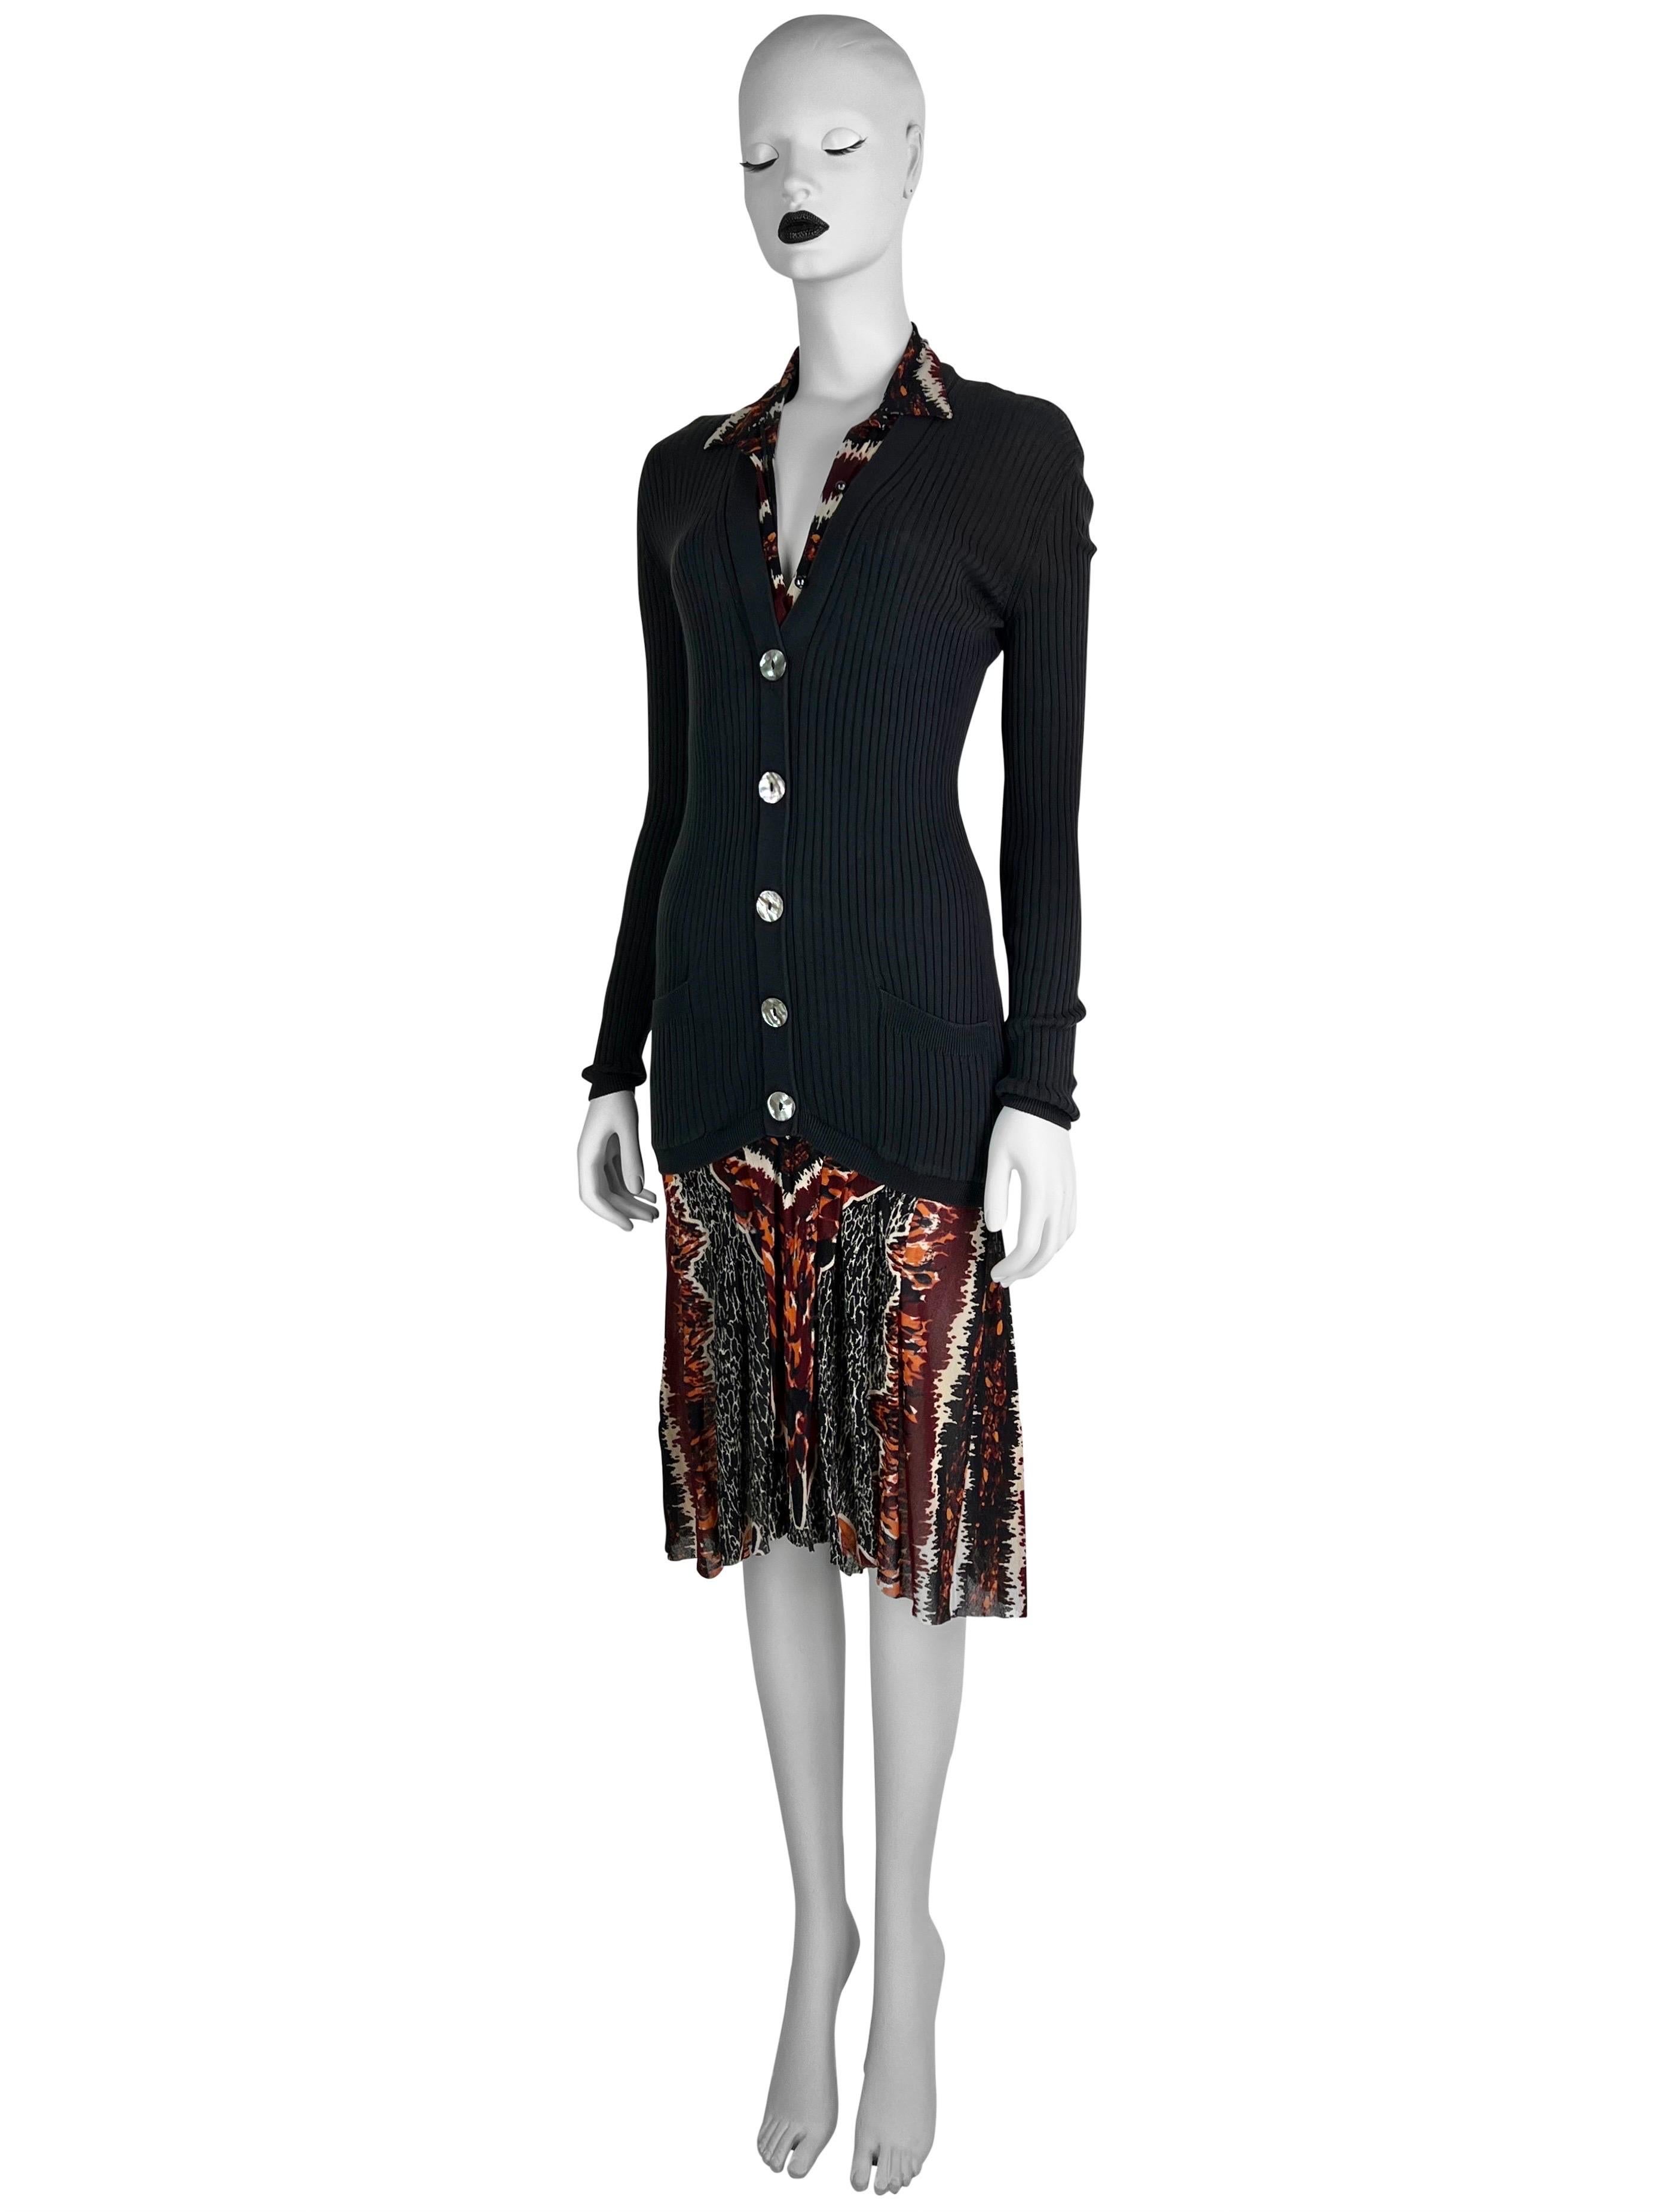 Black Jean-Paul Gaultier Spring 1997 Runway Cardigan-Dress For Sale